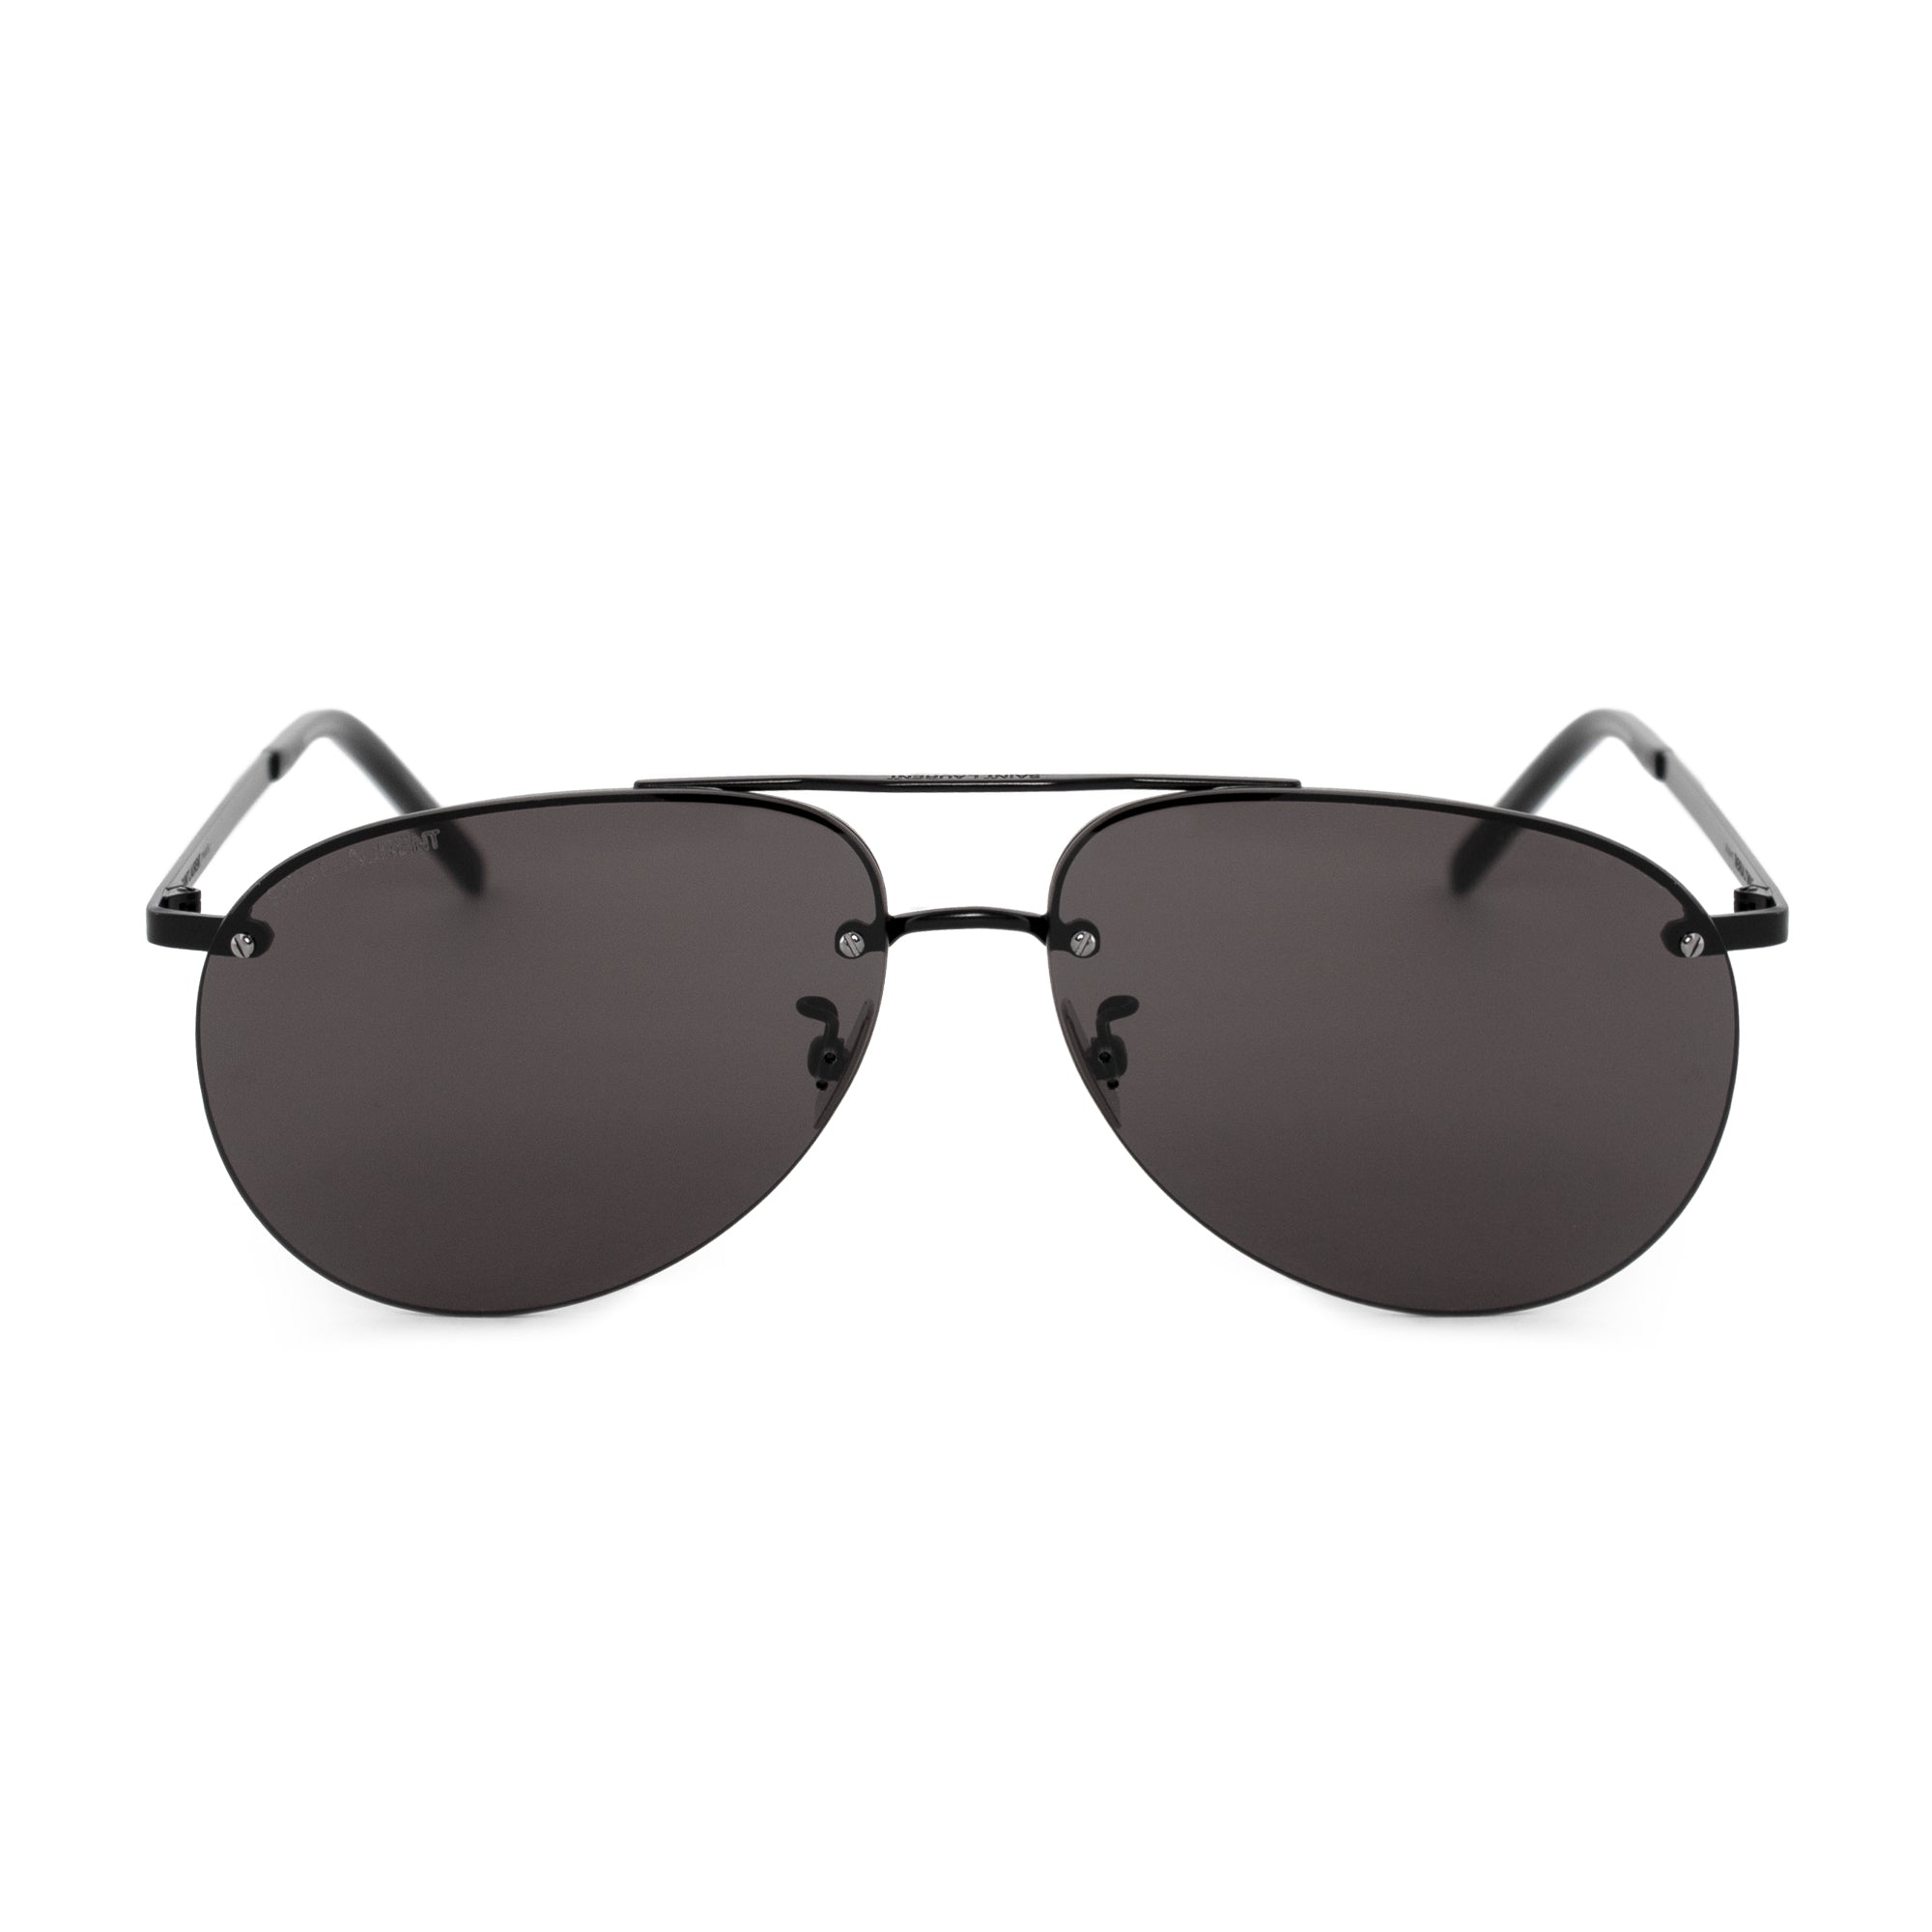 Saint Laurent Aviator Sunglasses SL416 002 60